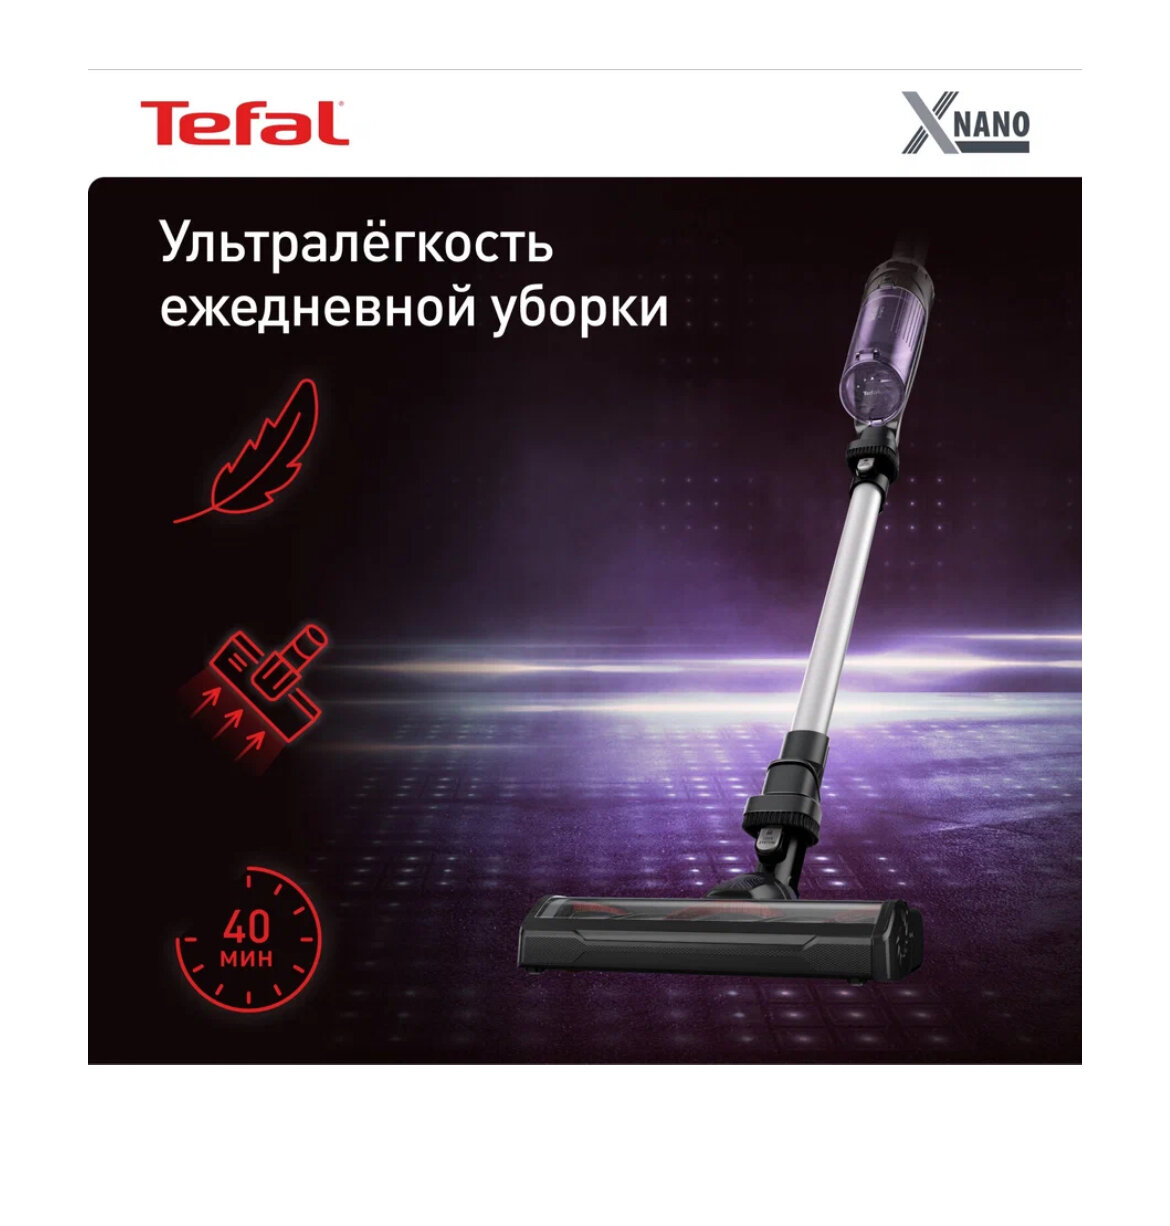 Пылесос Tefal X-Nano Essential TY1129WO, черный